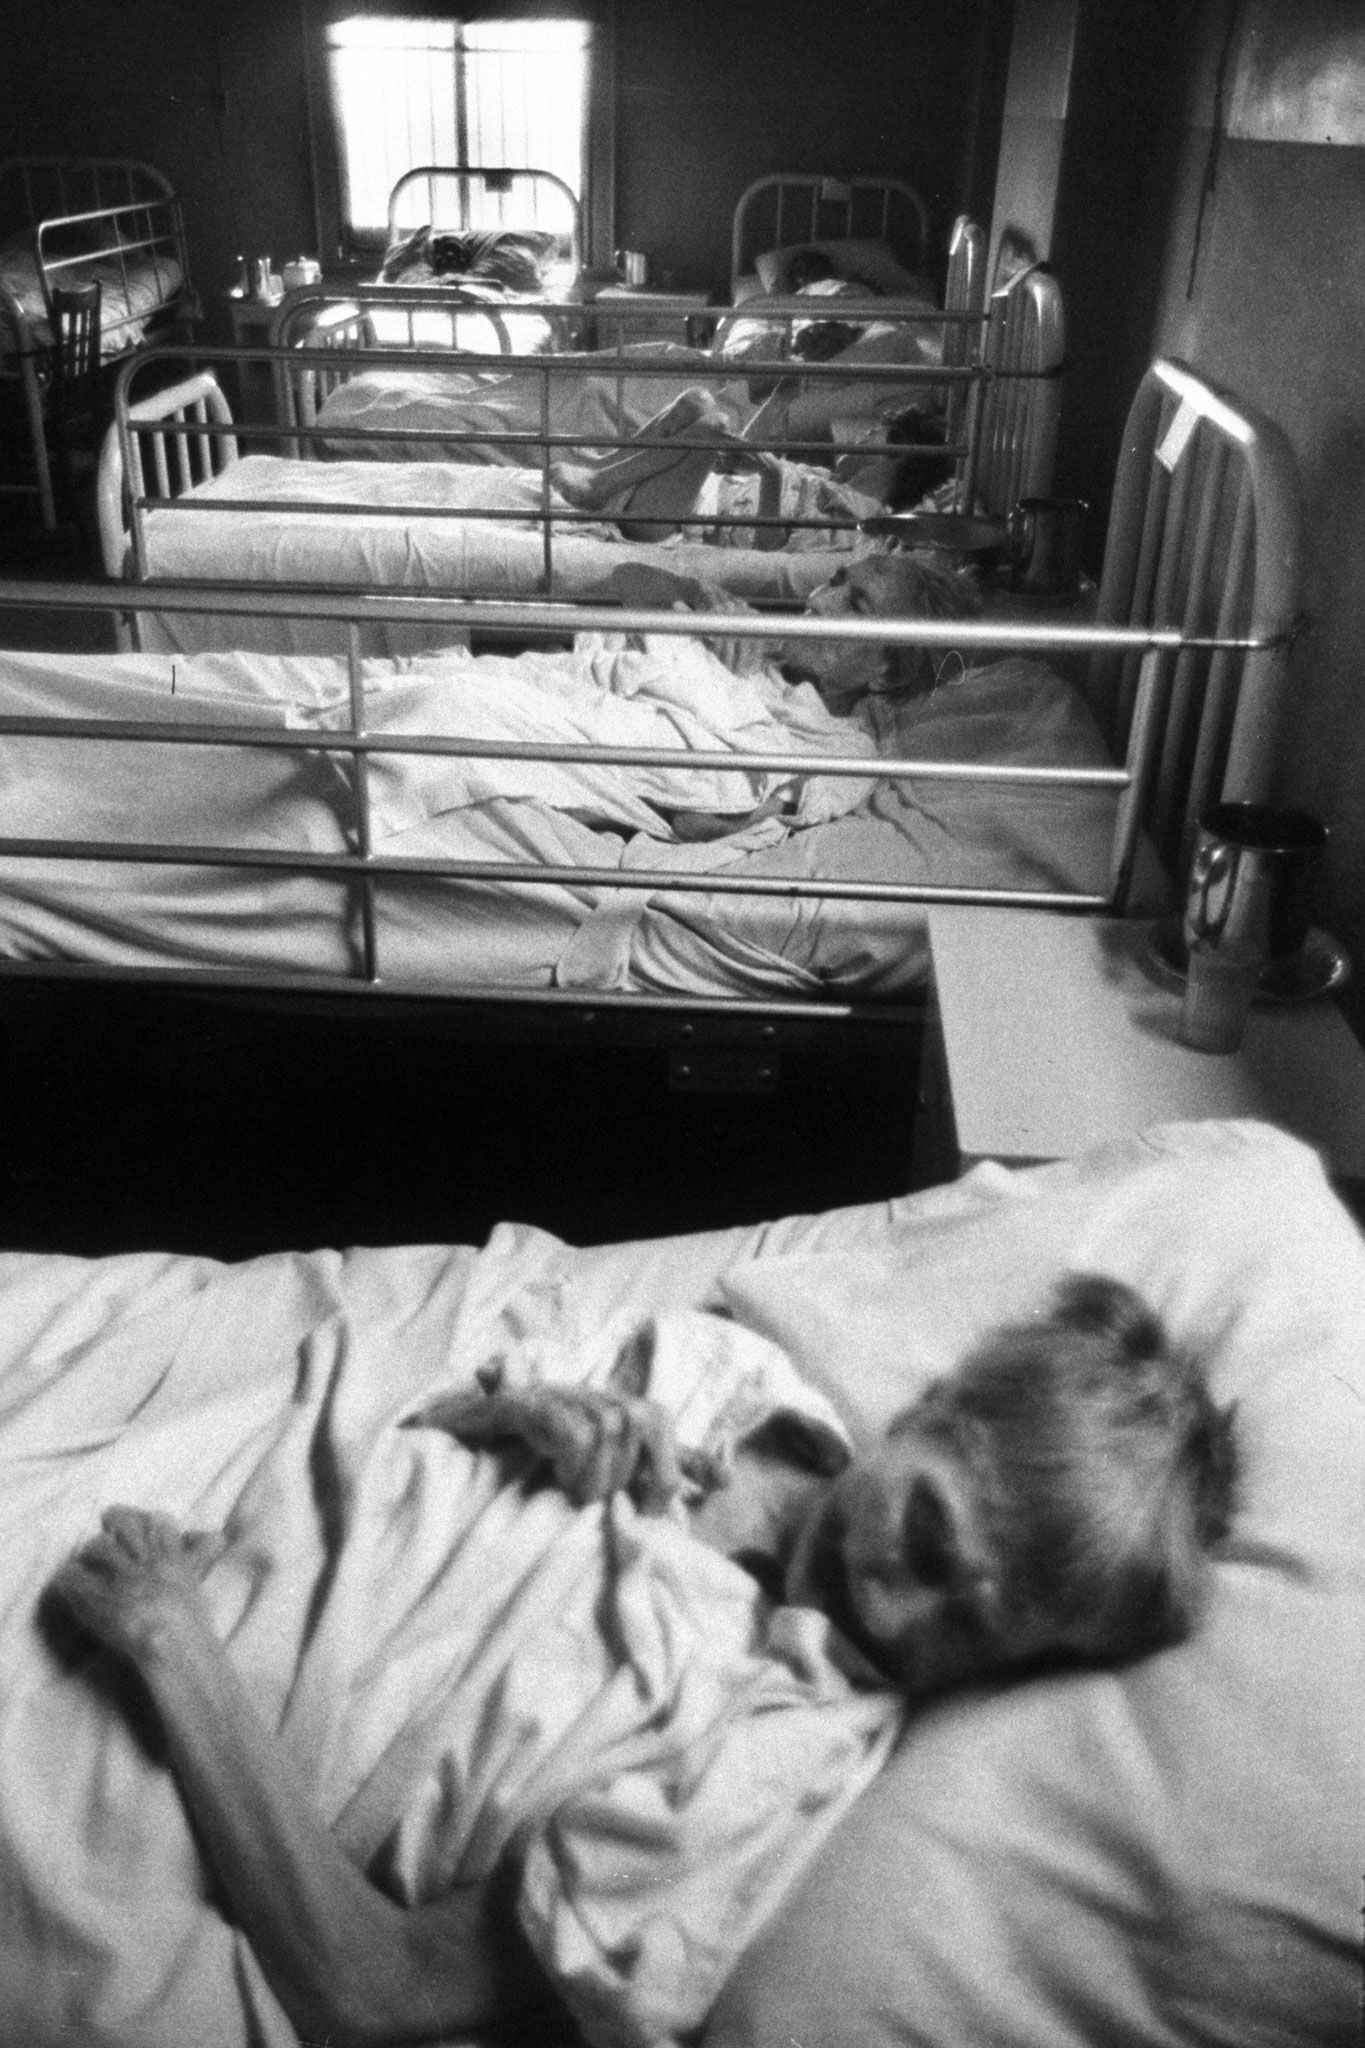 St. Louis Chronic Hospital, 1959.